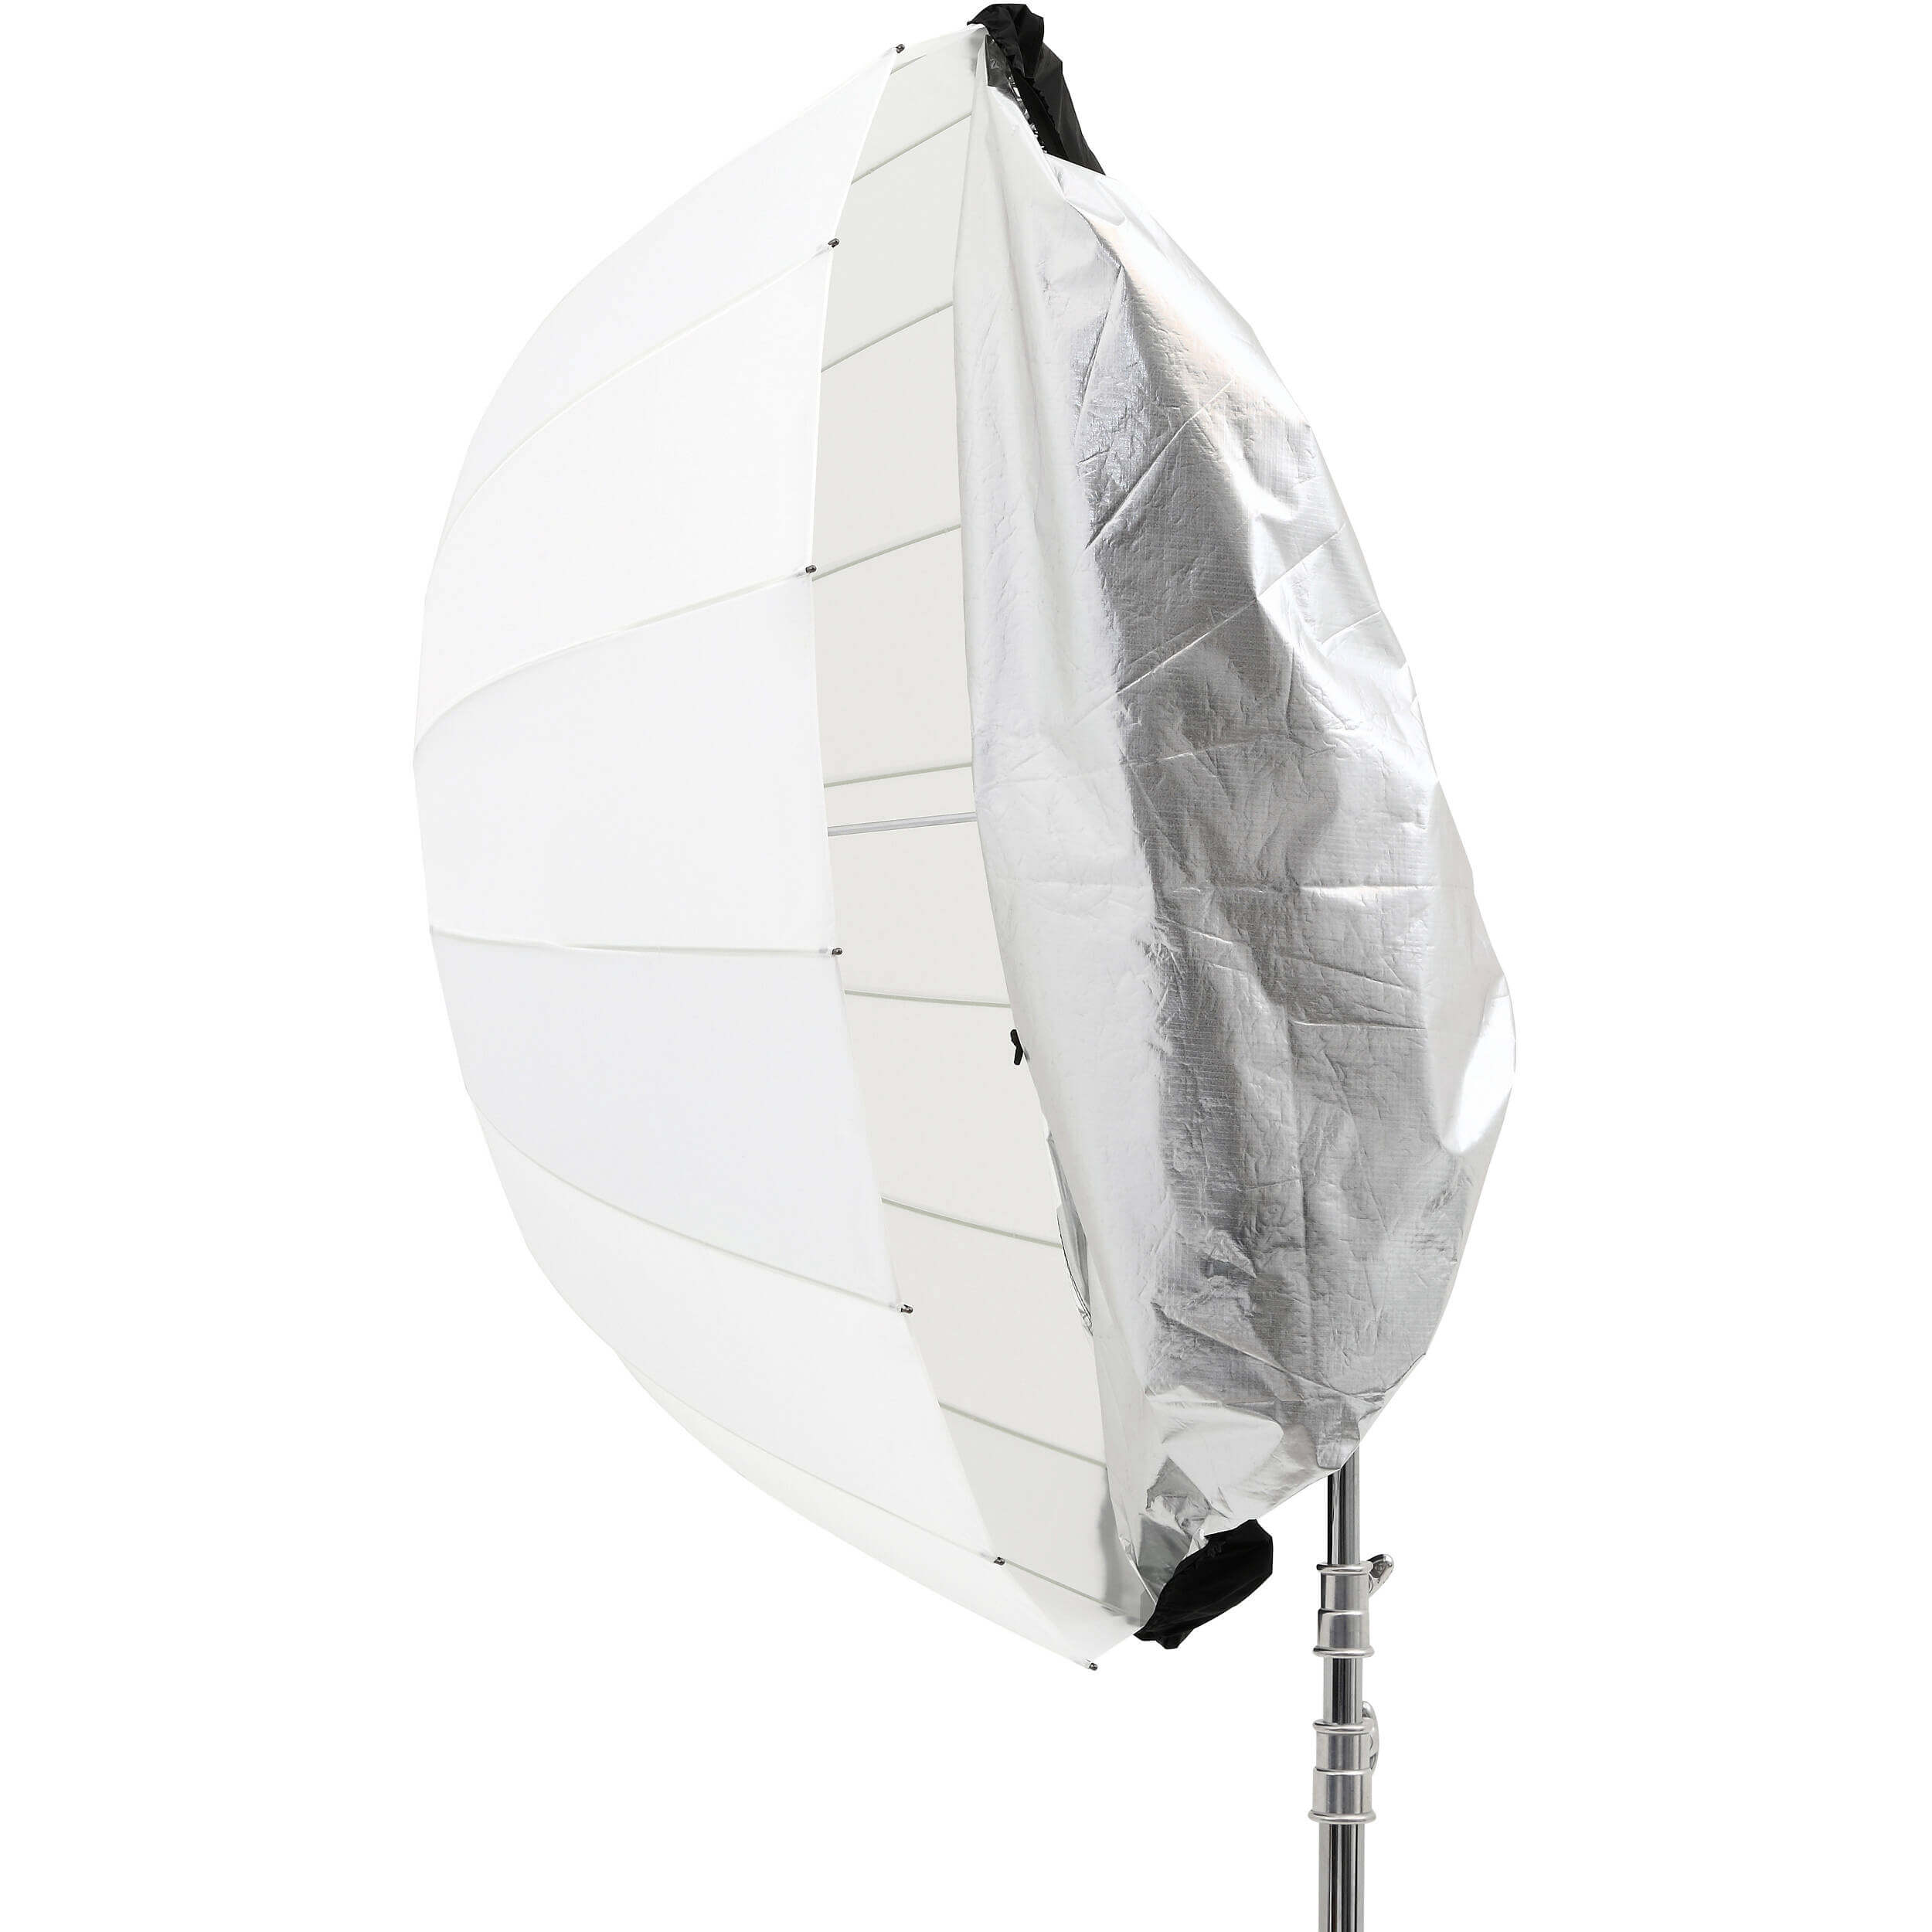 3in1 Parabolic Shoot-Through Umbrella with Black/Silver Cover